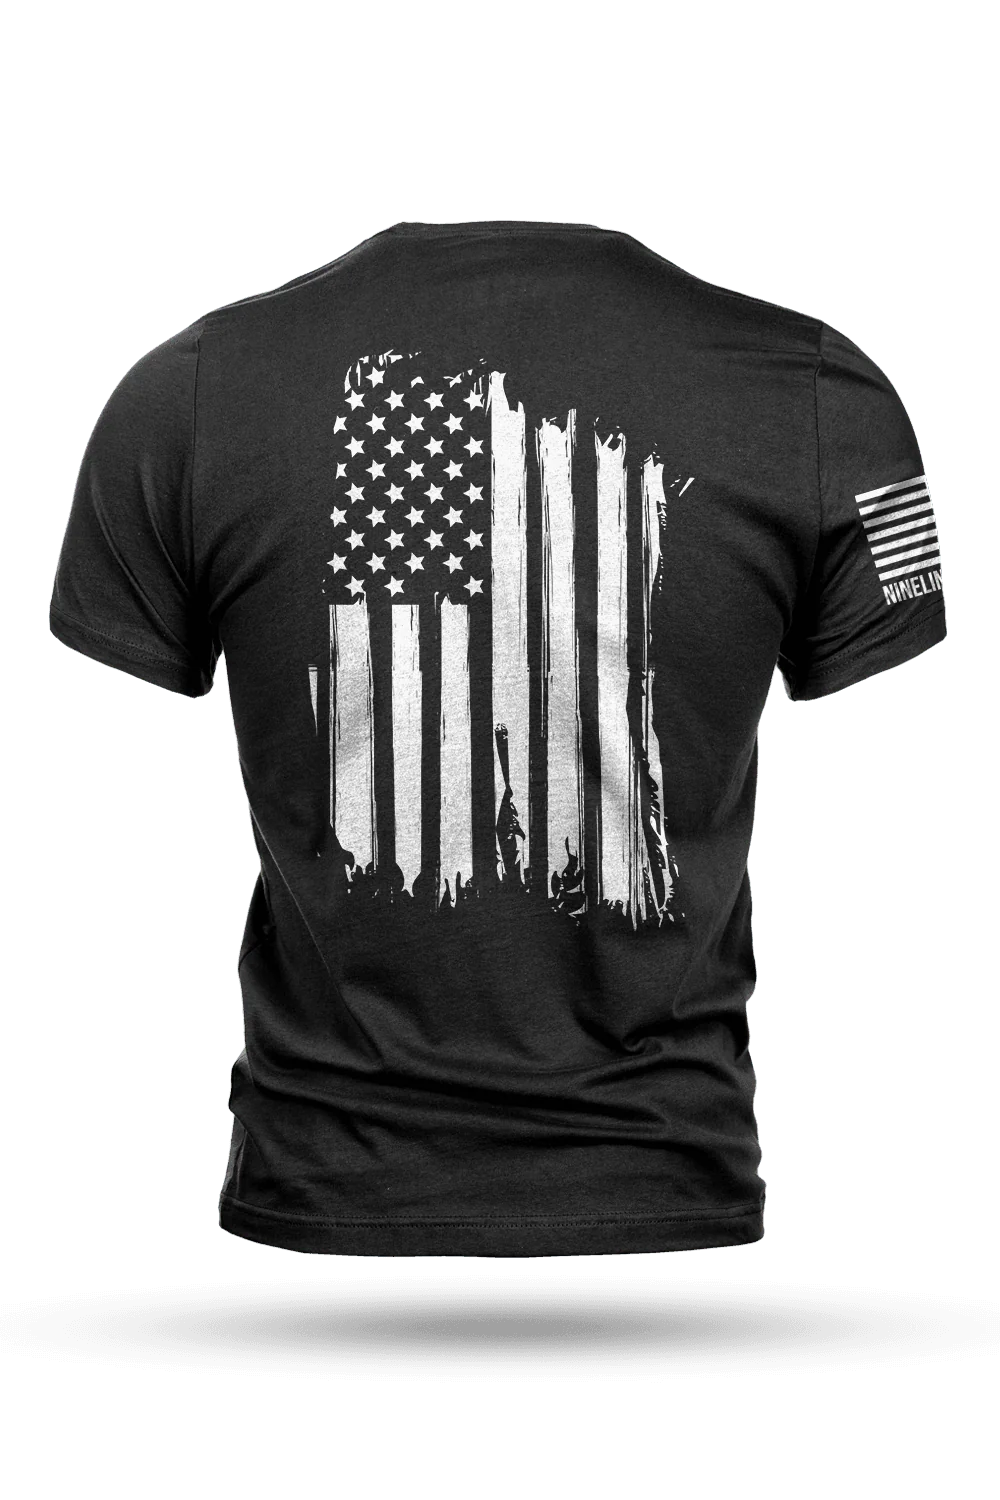 Nine Line Men's American Flag T-Shirt posted by ProdOrigin USA in Men's Apparel